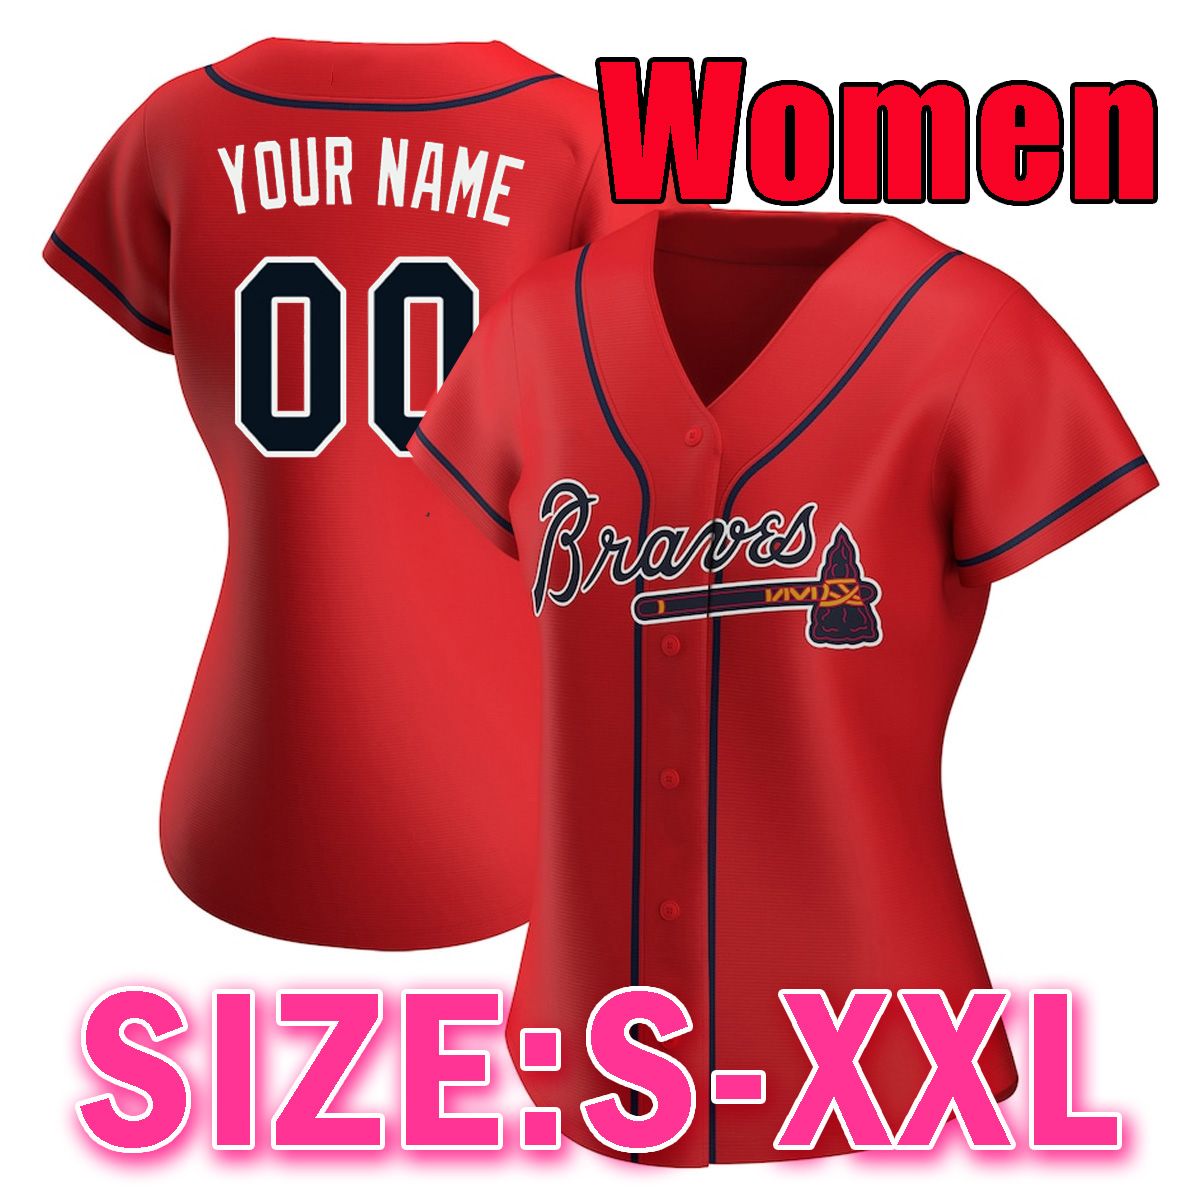 Mulheres (tamanho: S-xxl) Yongshi